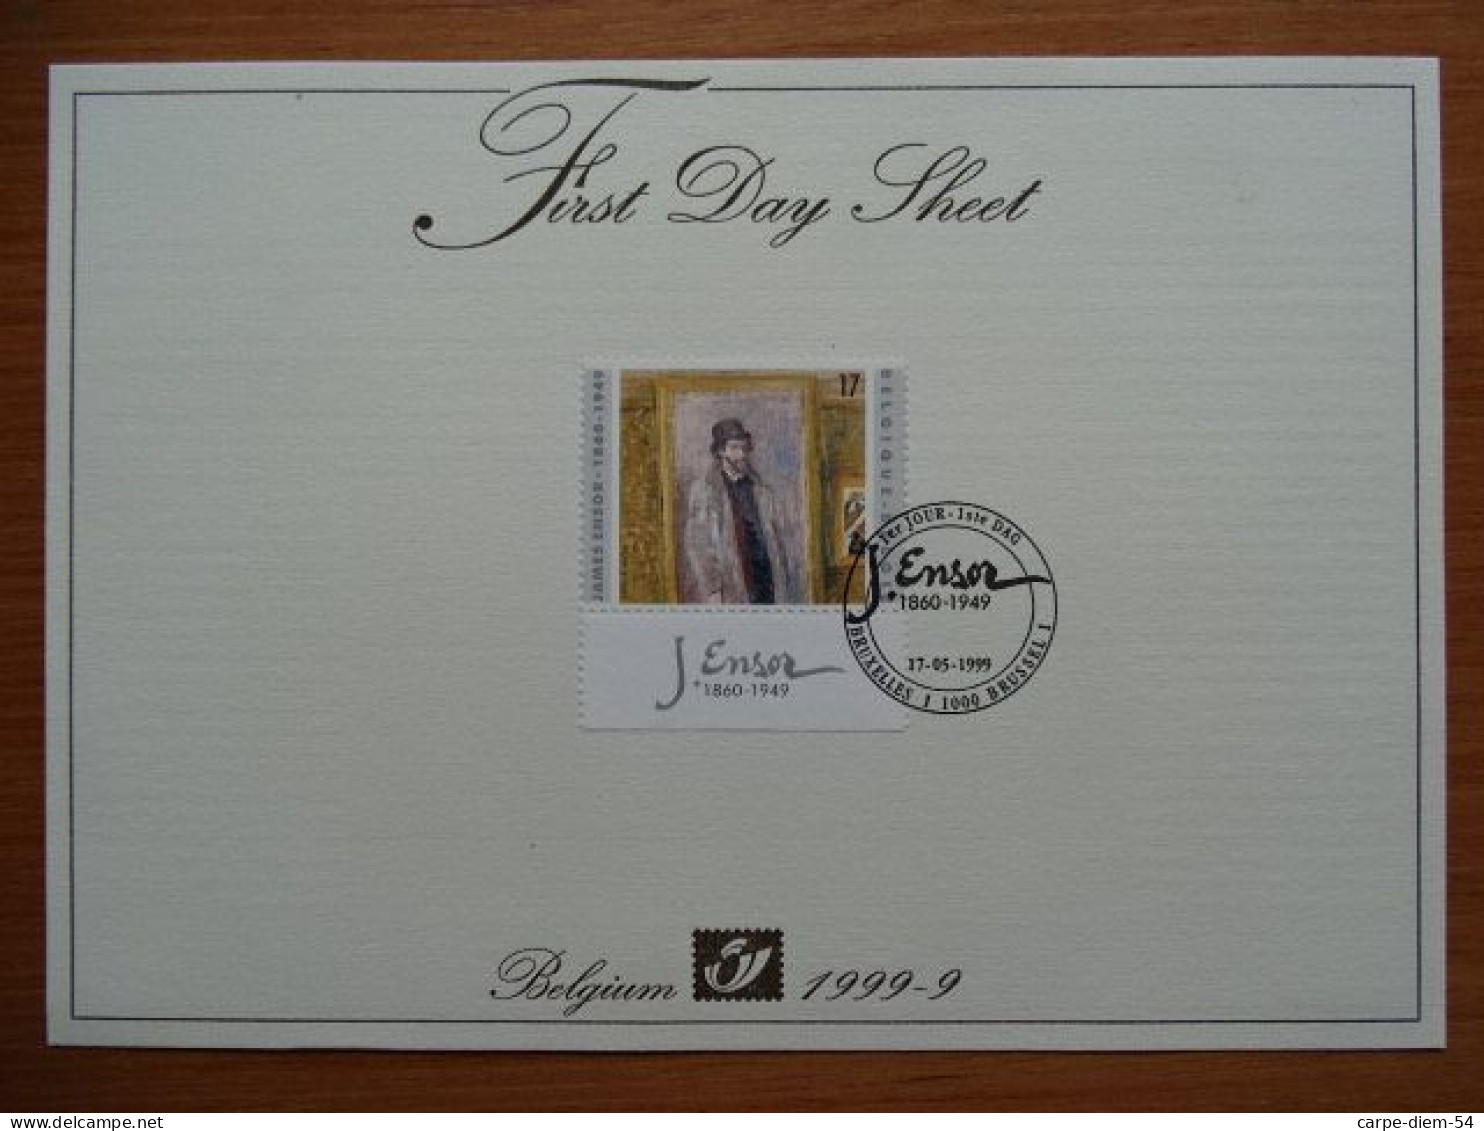 Belgique & Israel - First Day Sheet + Enveloppe FDC + 2 timbres non oblitérés - James Ensor - 1999